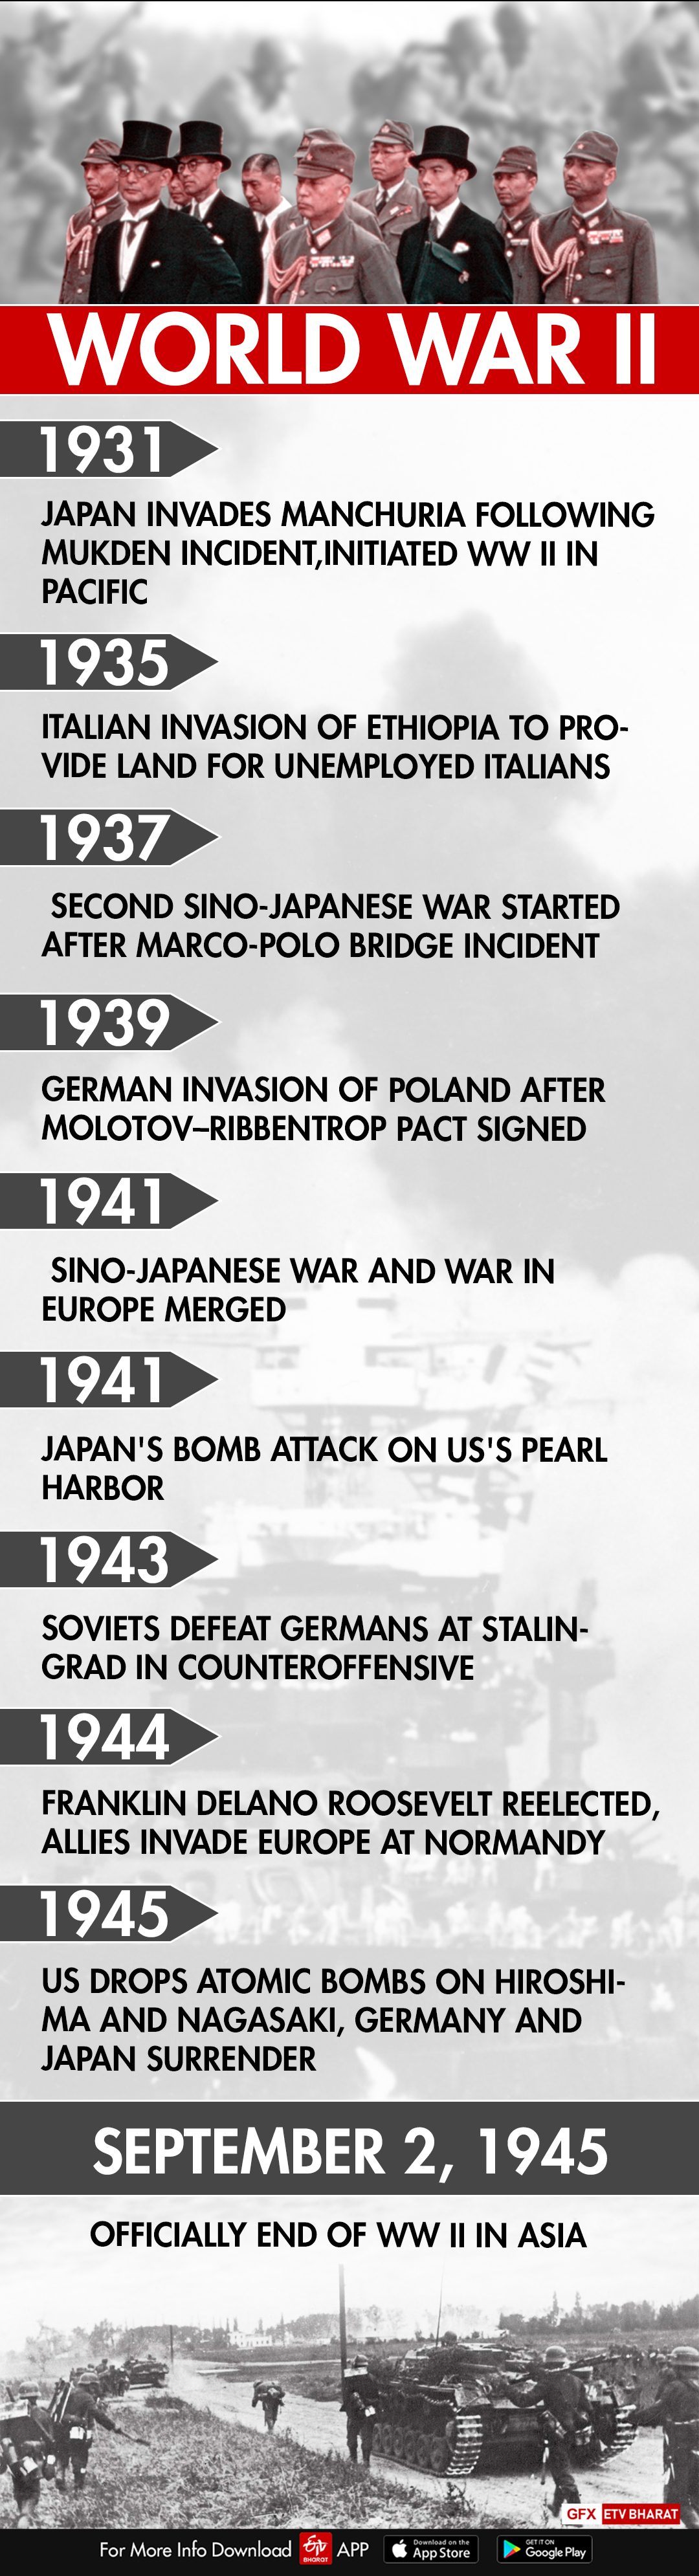 75 Years of WW II